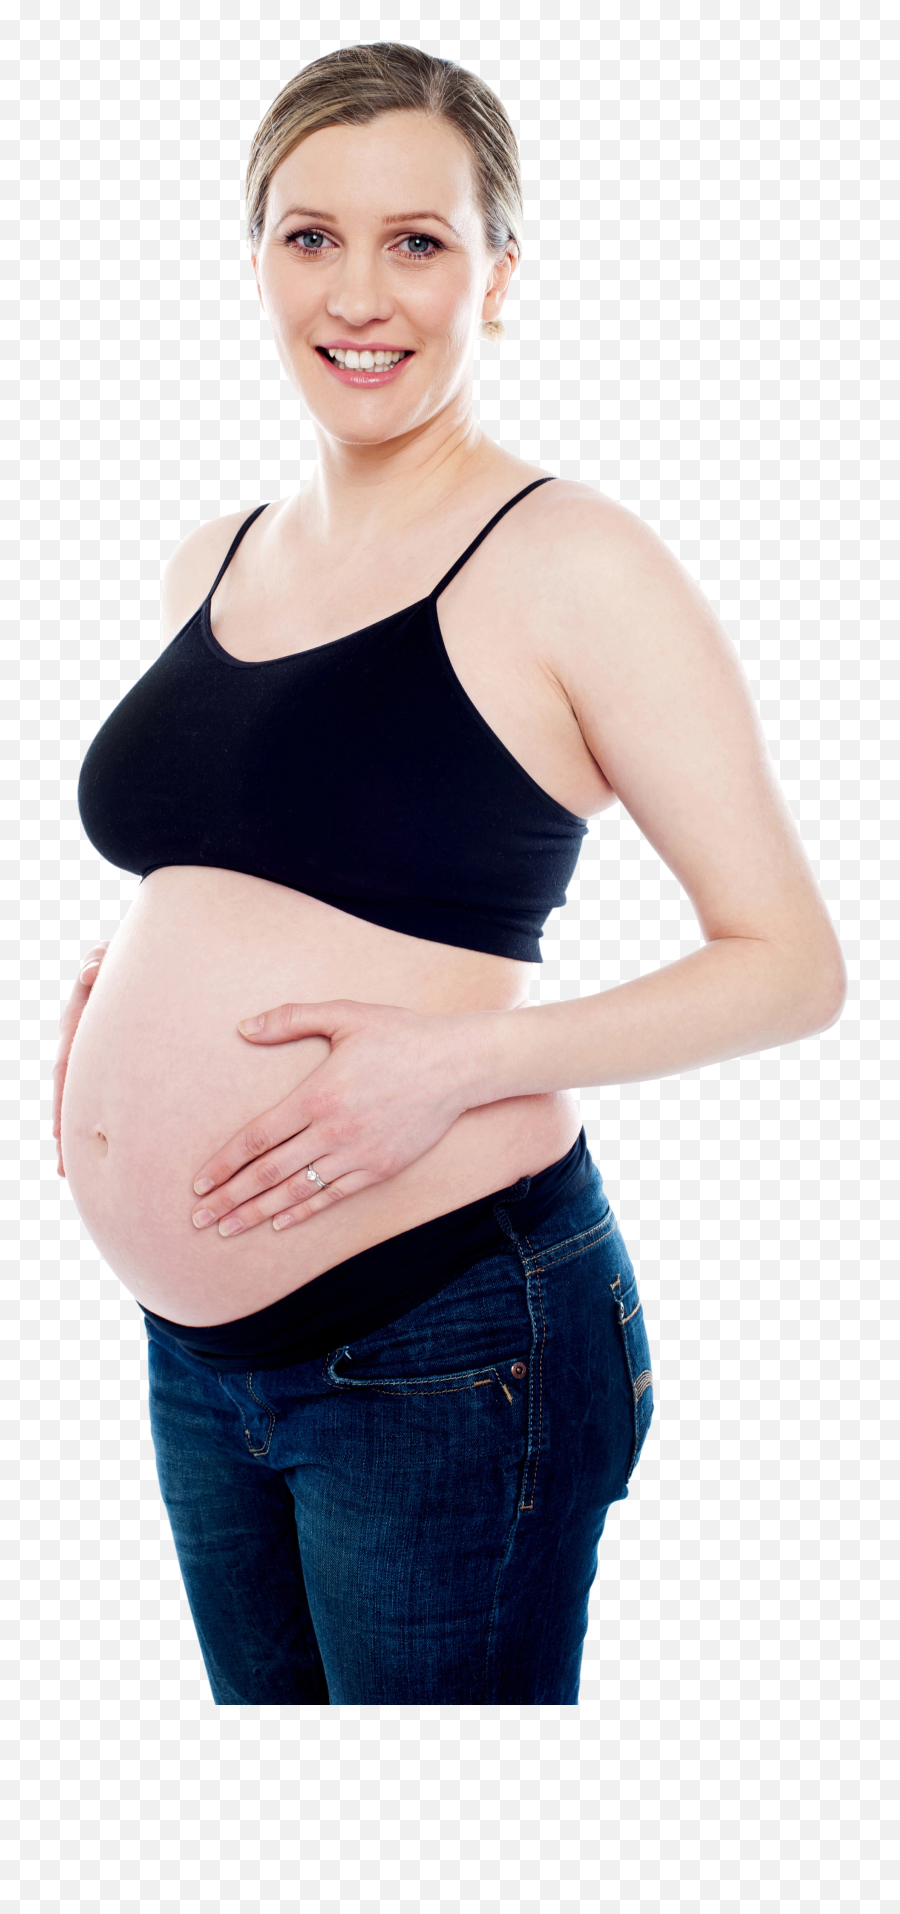 Download Free Png Pregnant Woman - Fruit Of The Wokali Stretch Marks Emoji,Pregnant Woman Emoji